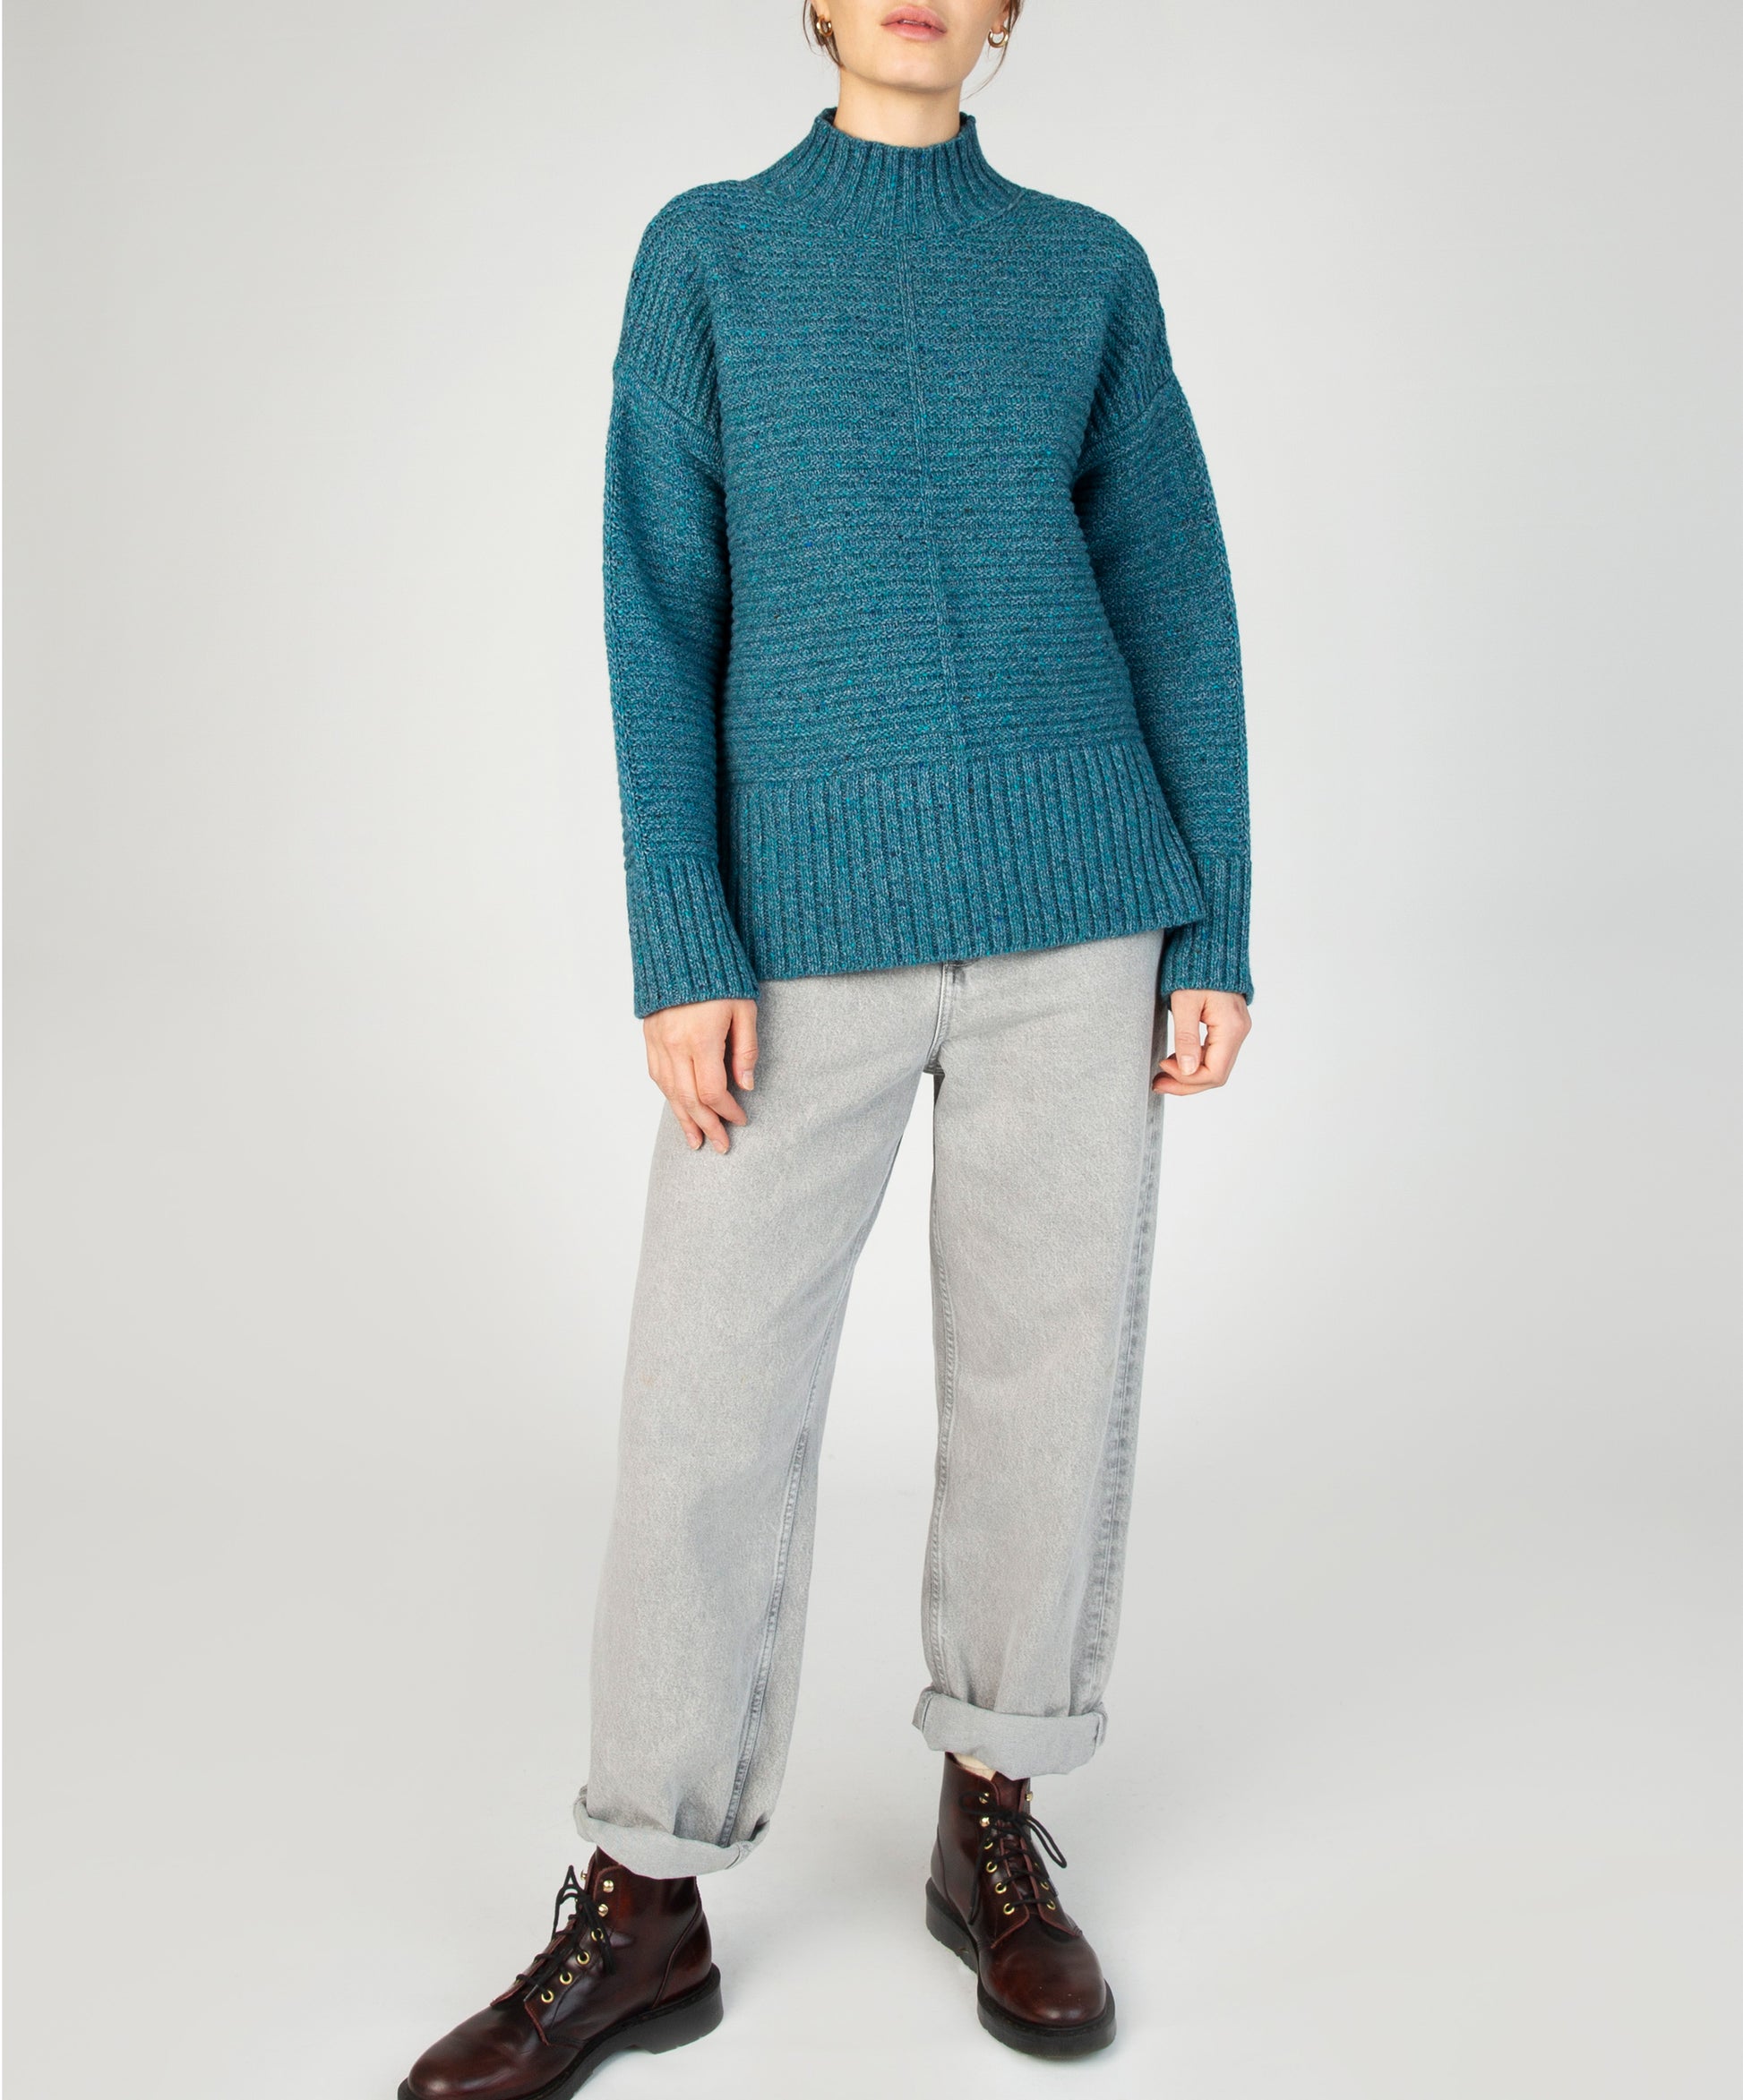 IrelandsEye Knitwear ‘Iris’ Contrast Panel Funnel Neck Sweater Aquamarine